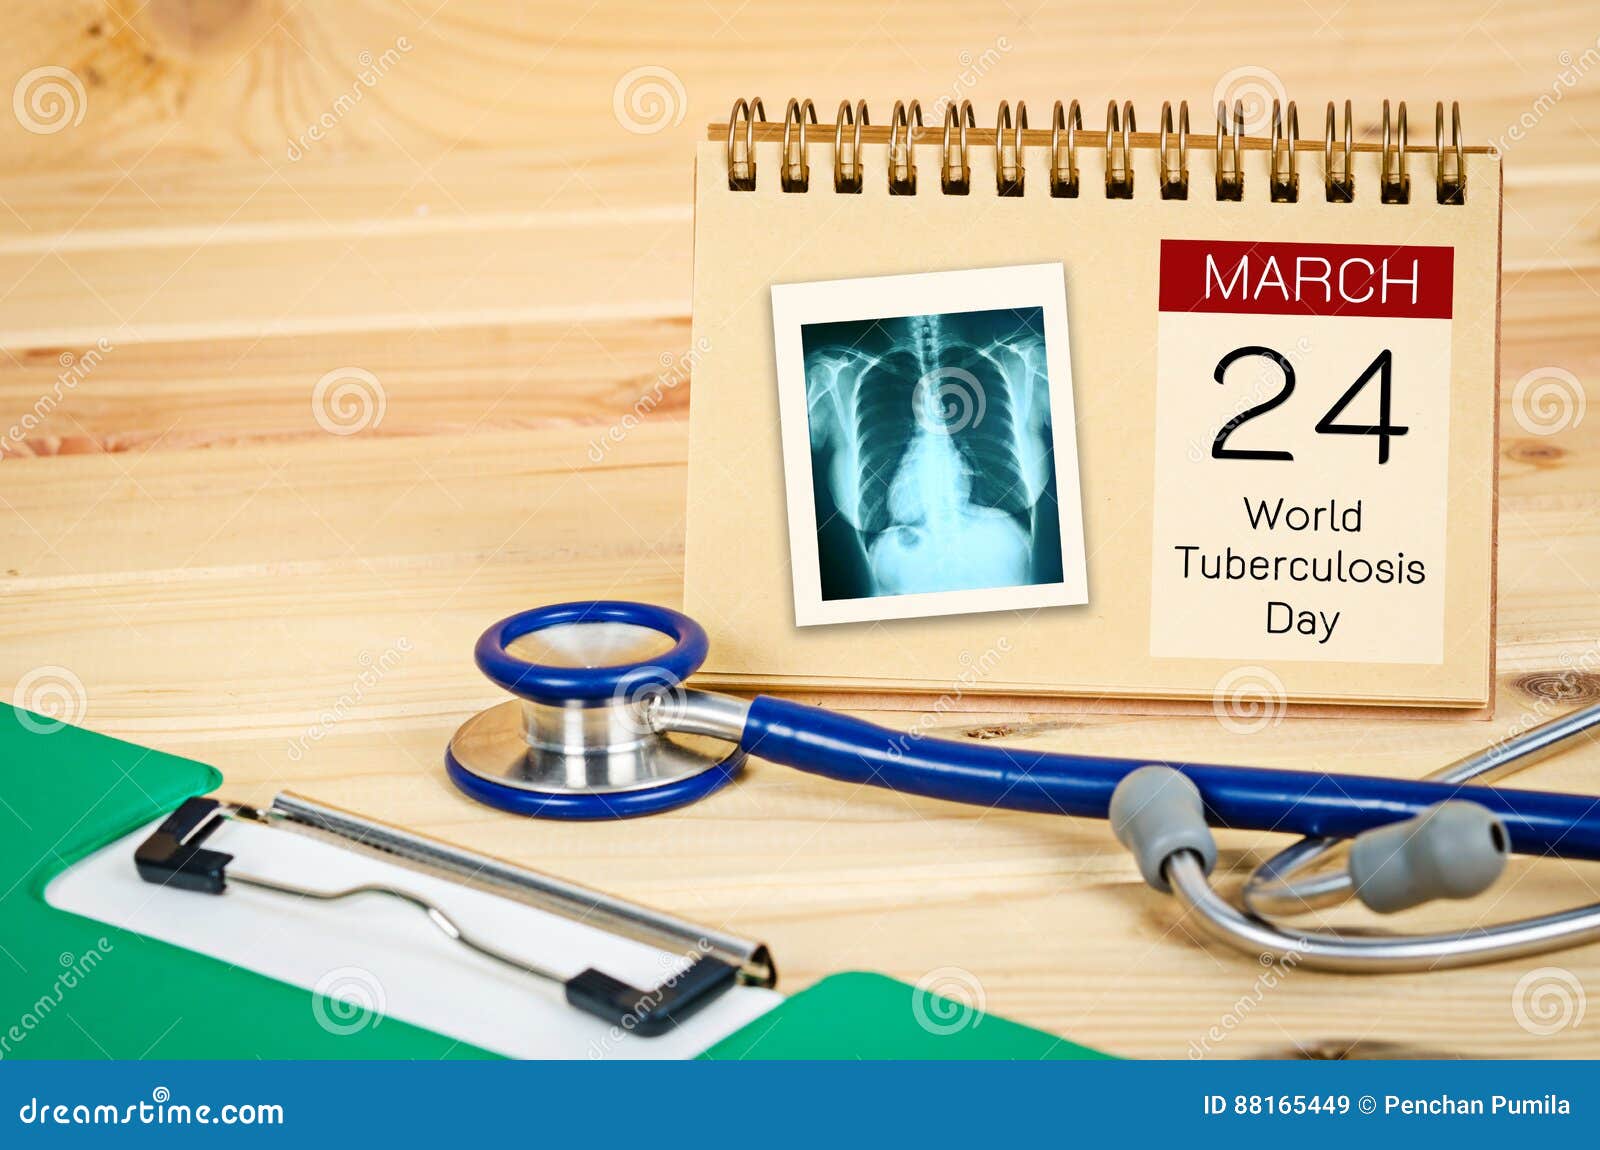 world tuberculosis day.